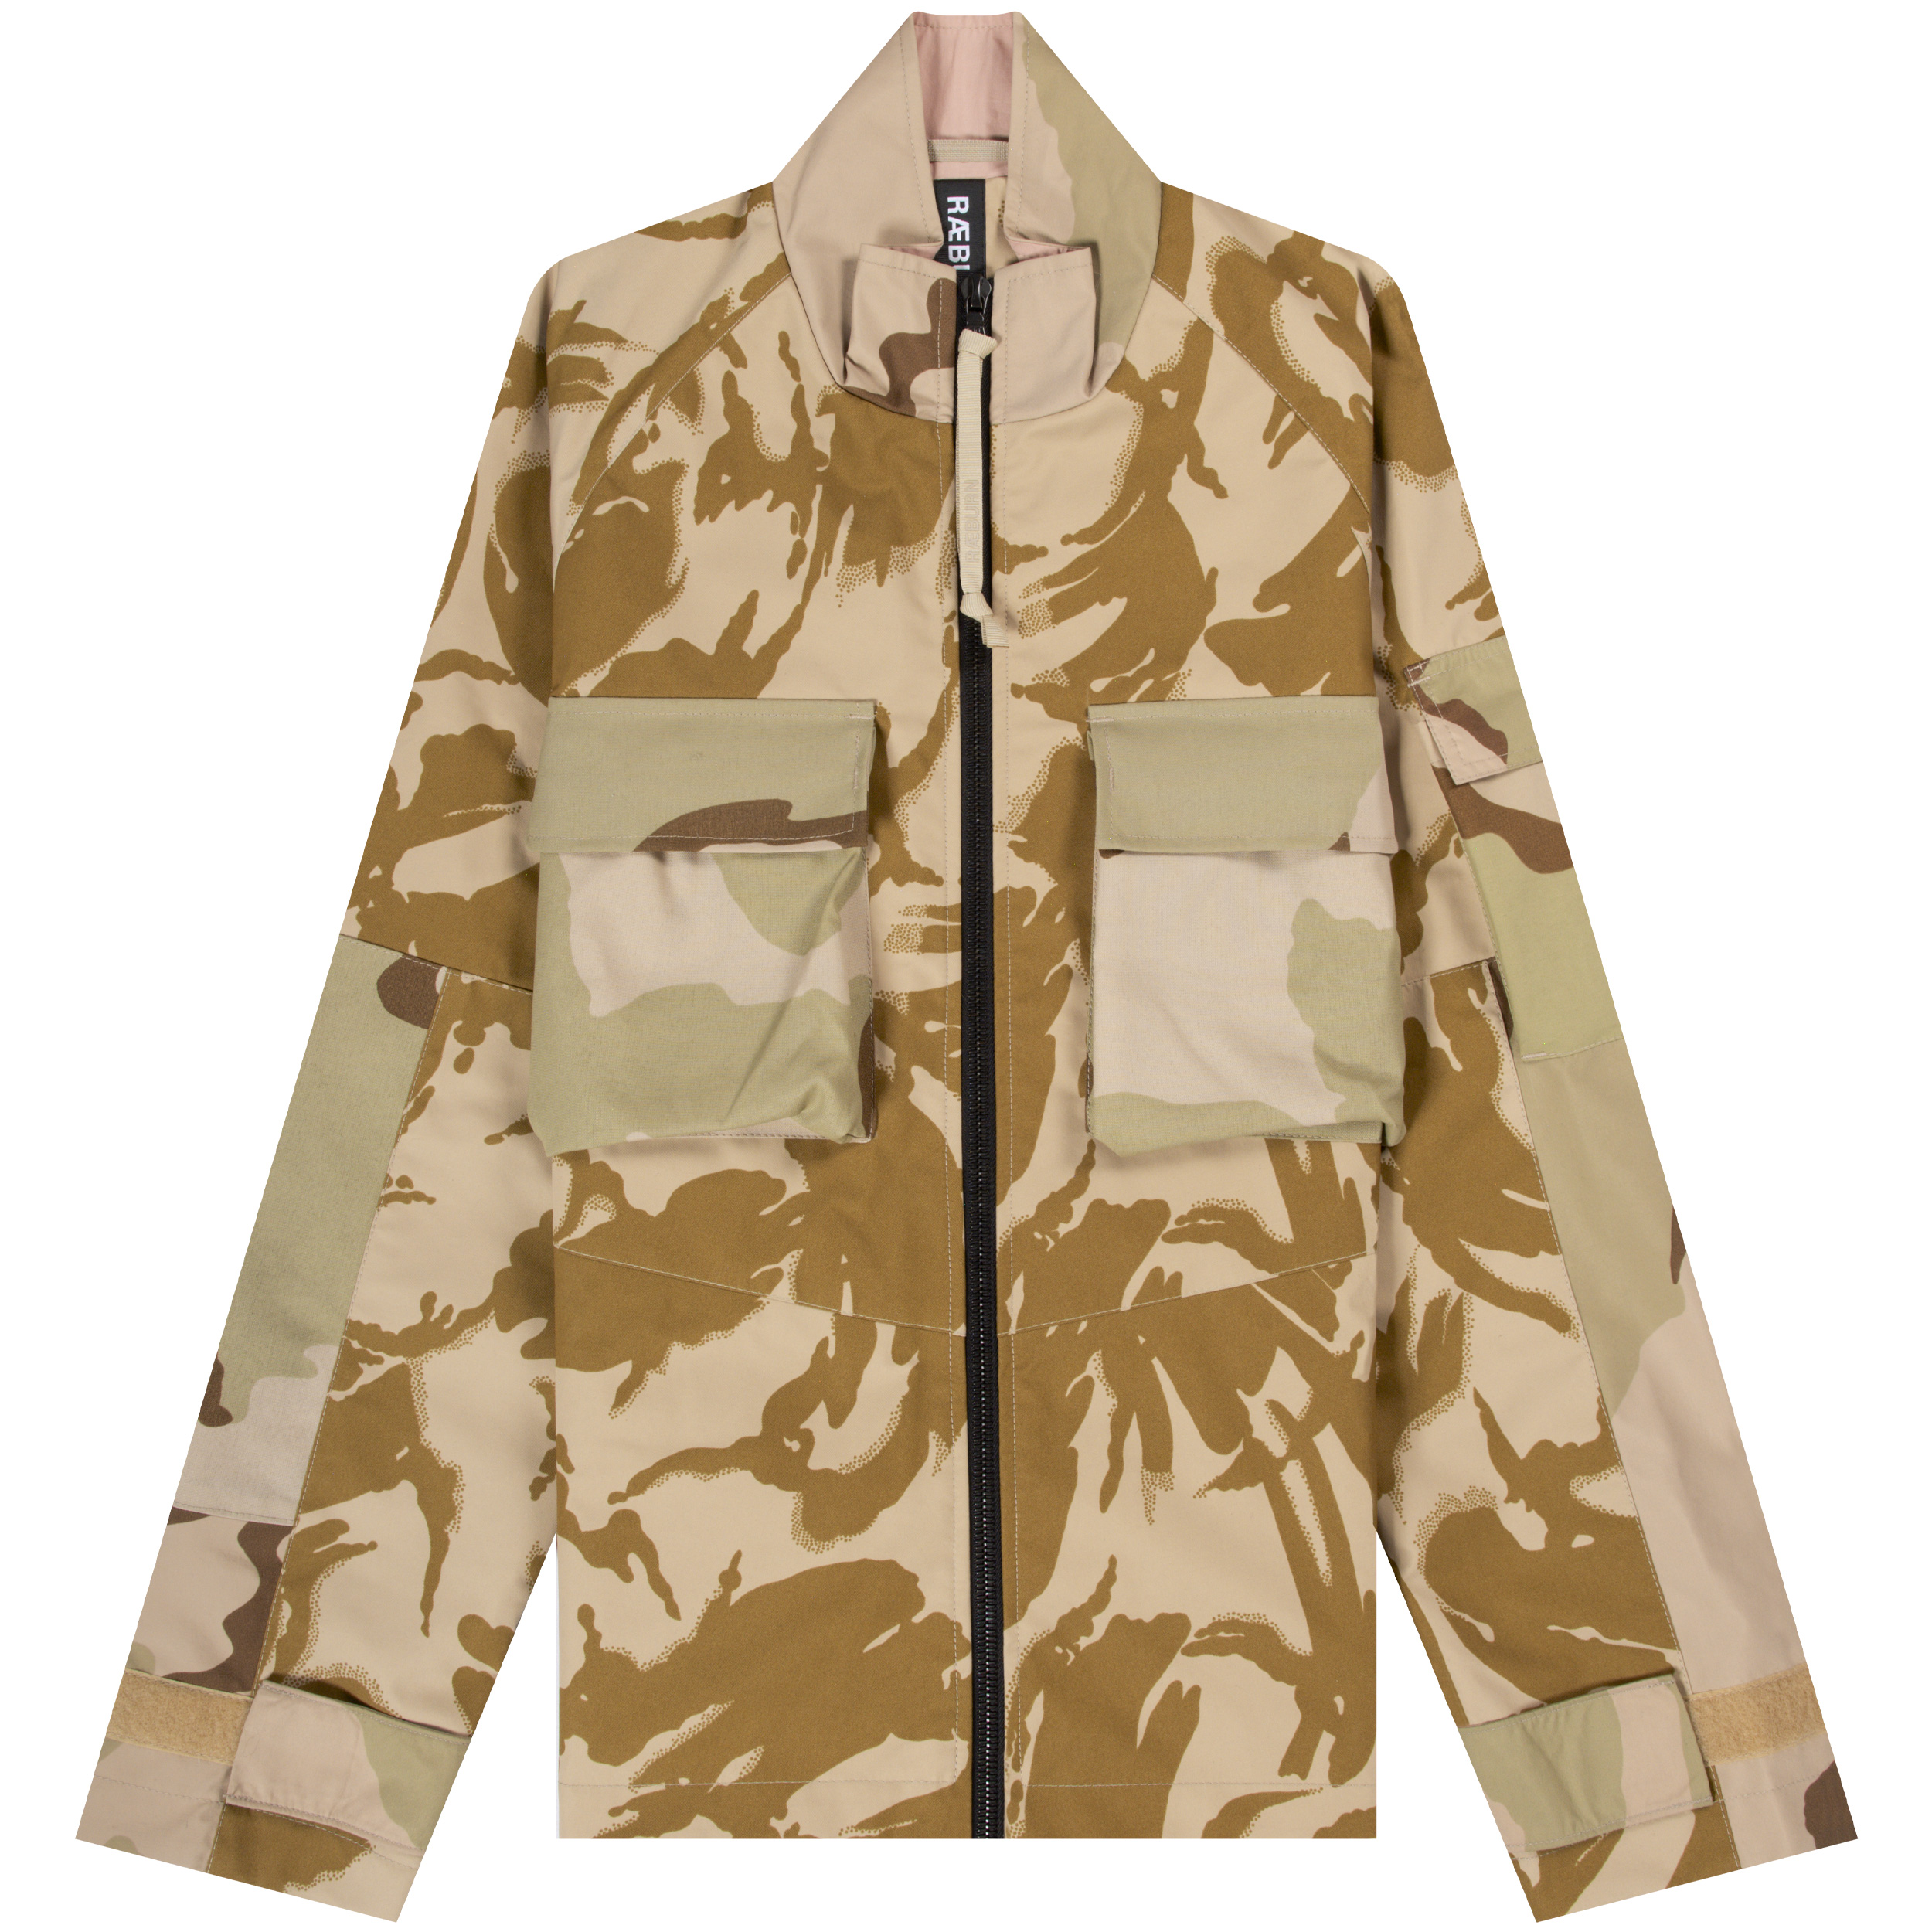 RAEBURN ’Conceal Blouson’ Full Zip Jacket Desert Camo